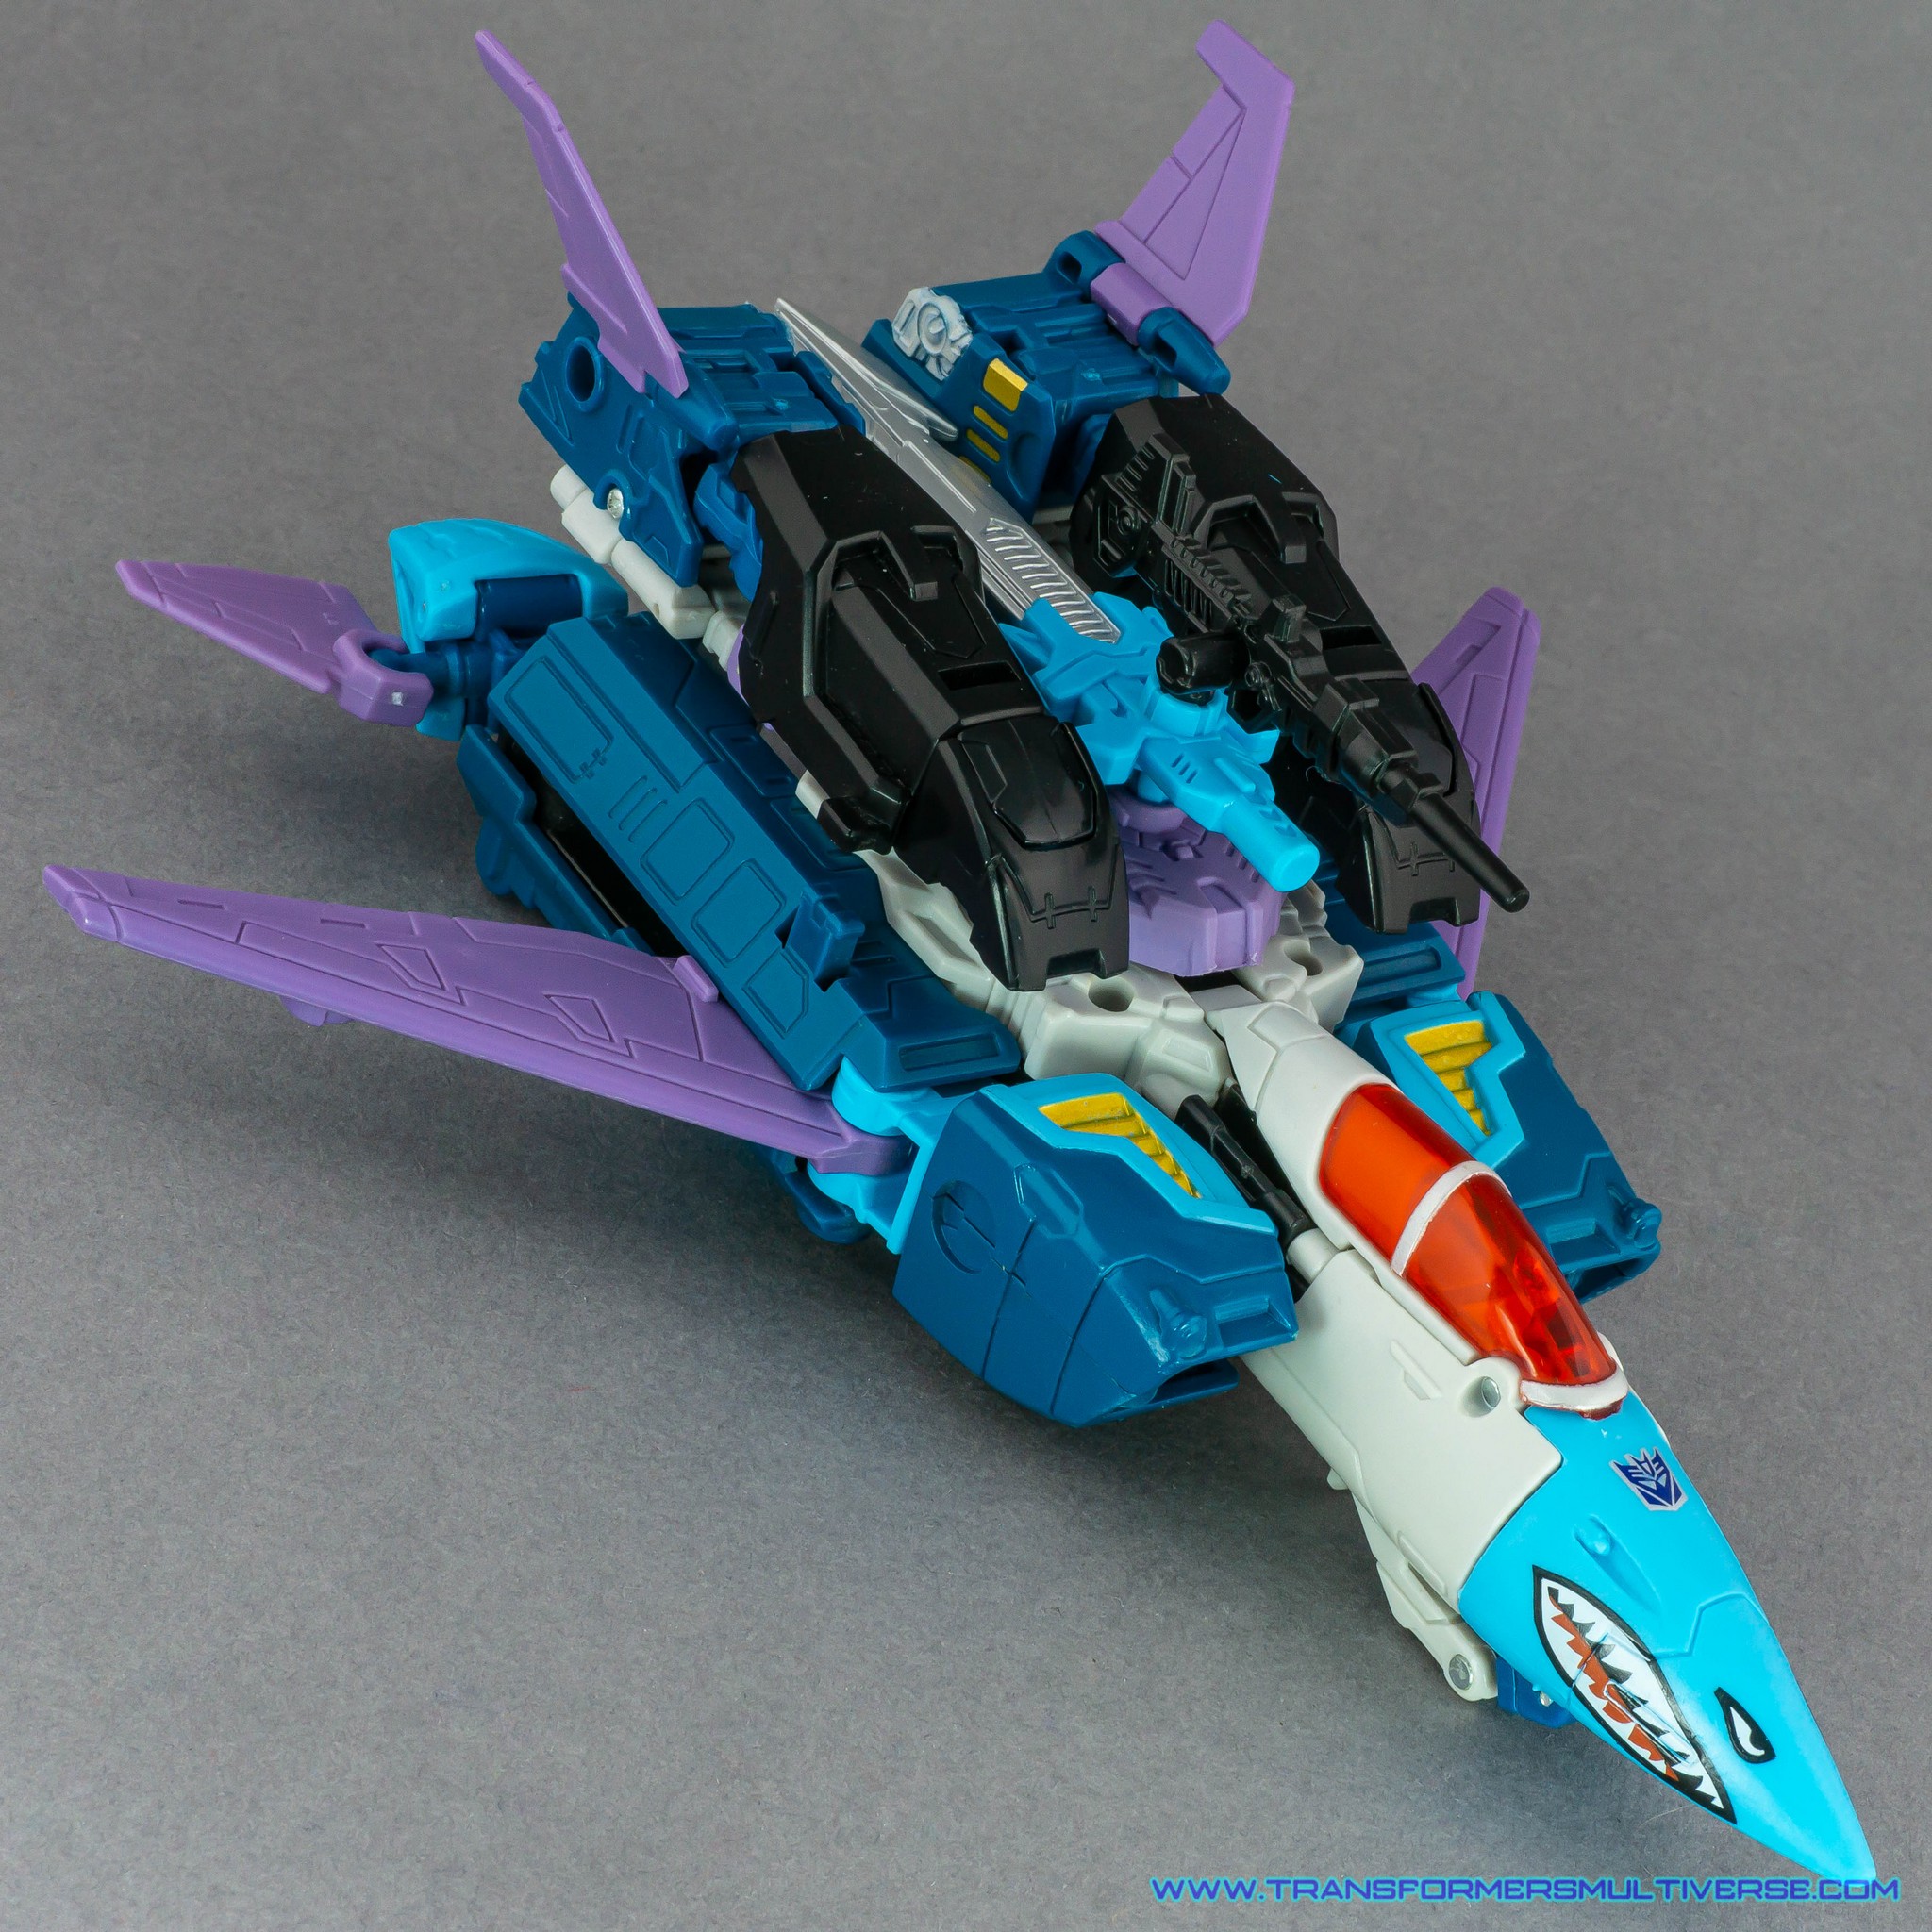 Transformers Generations Doubledealer Jet mode, alternate angle